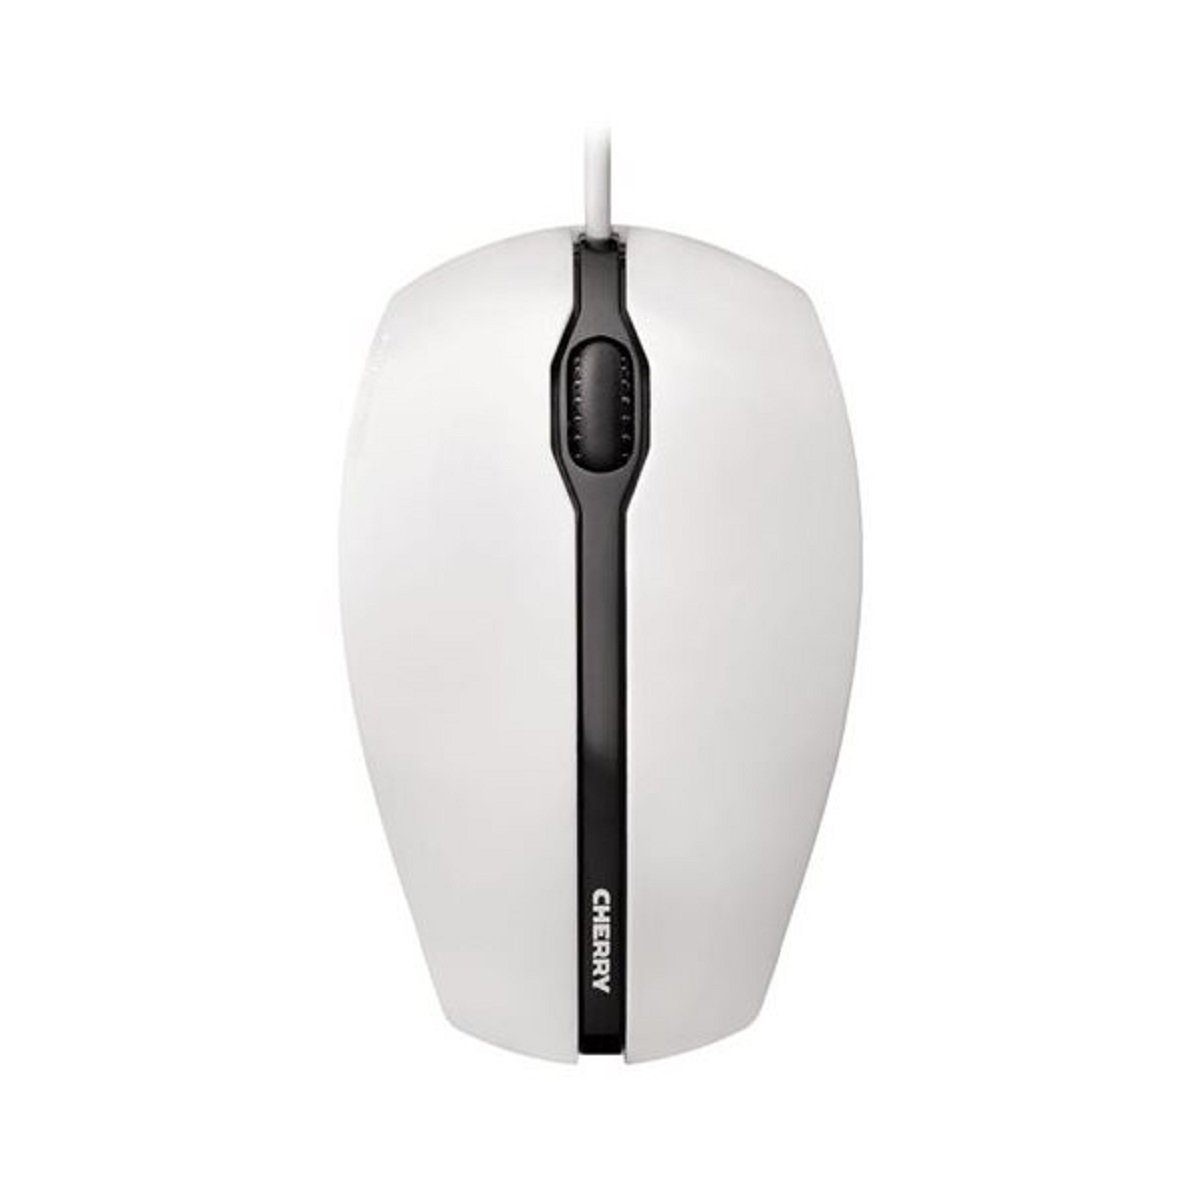 TERRA TERRA Mouse 1000 Corded USB white grey Maus (Weiß grau, USB)